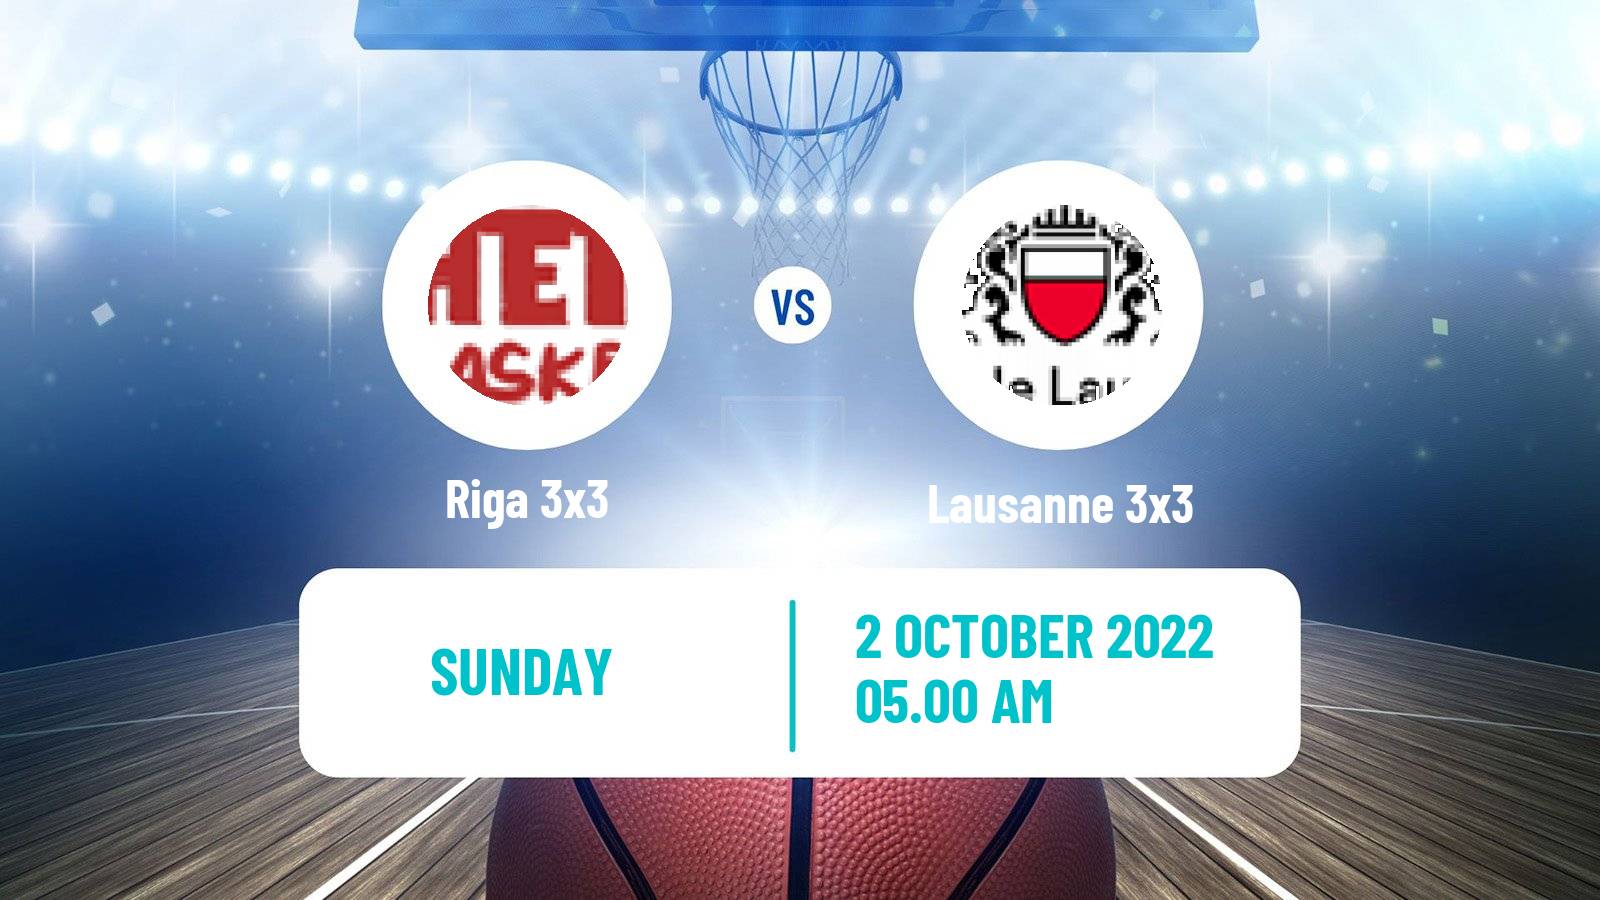 Basketball World Tour Сebu 3x3 Riga 3x3 - Lausanne 3x3